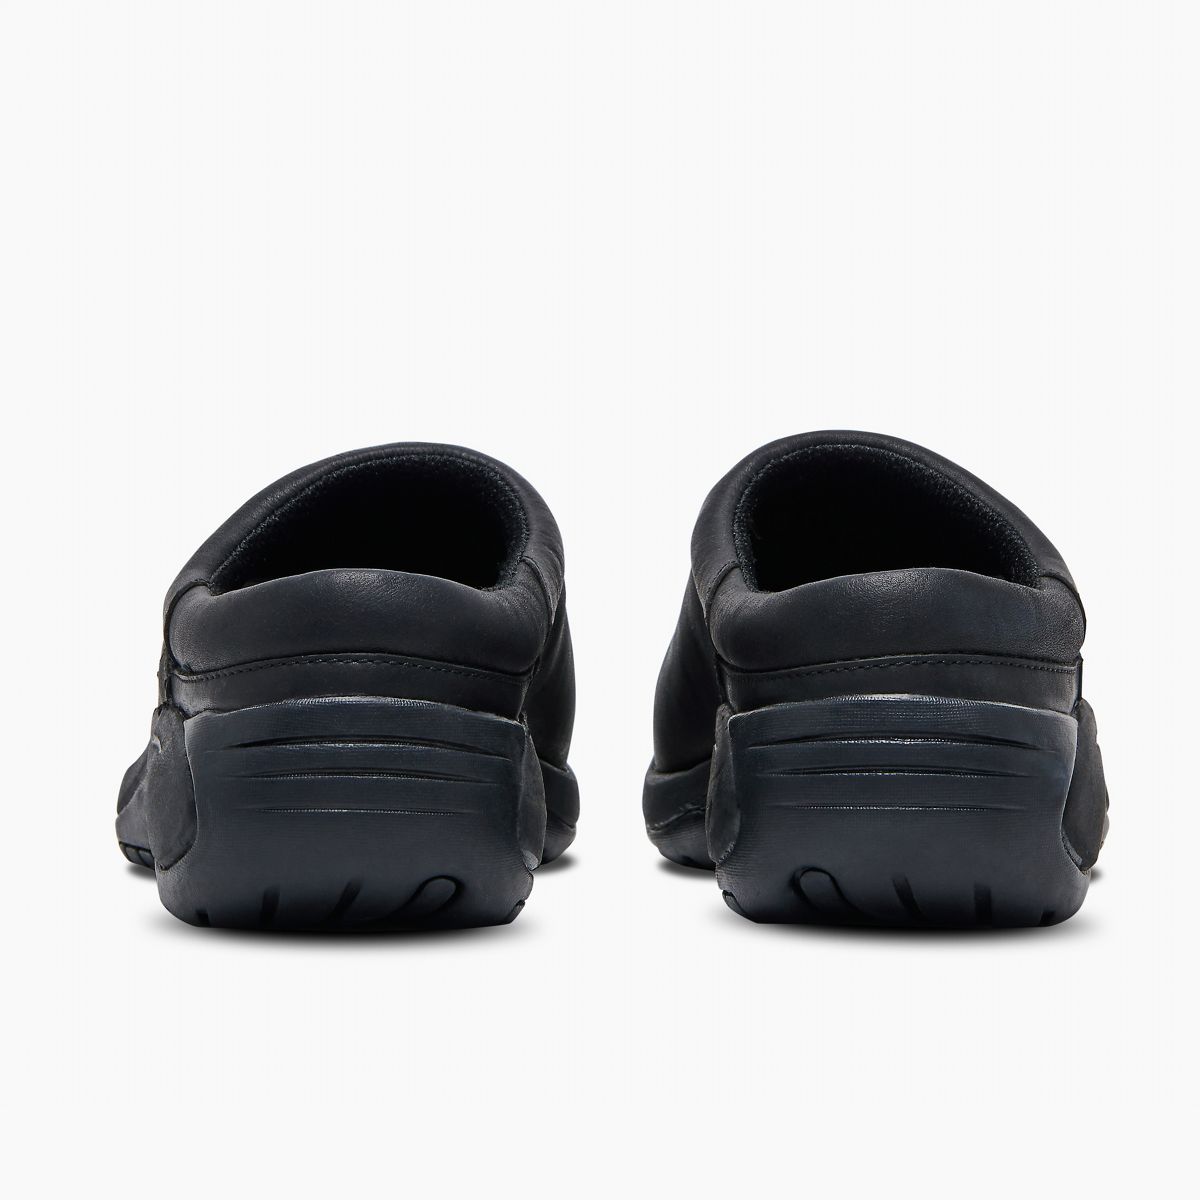 Men's Encore Gust 2 Wide Width Casual Shoes | Merrell